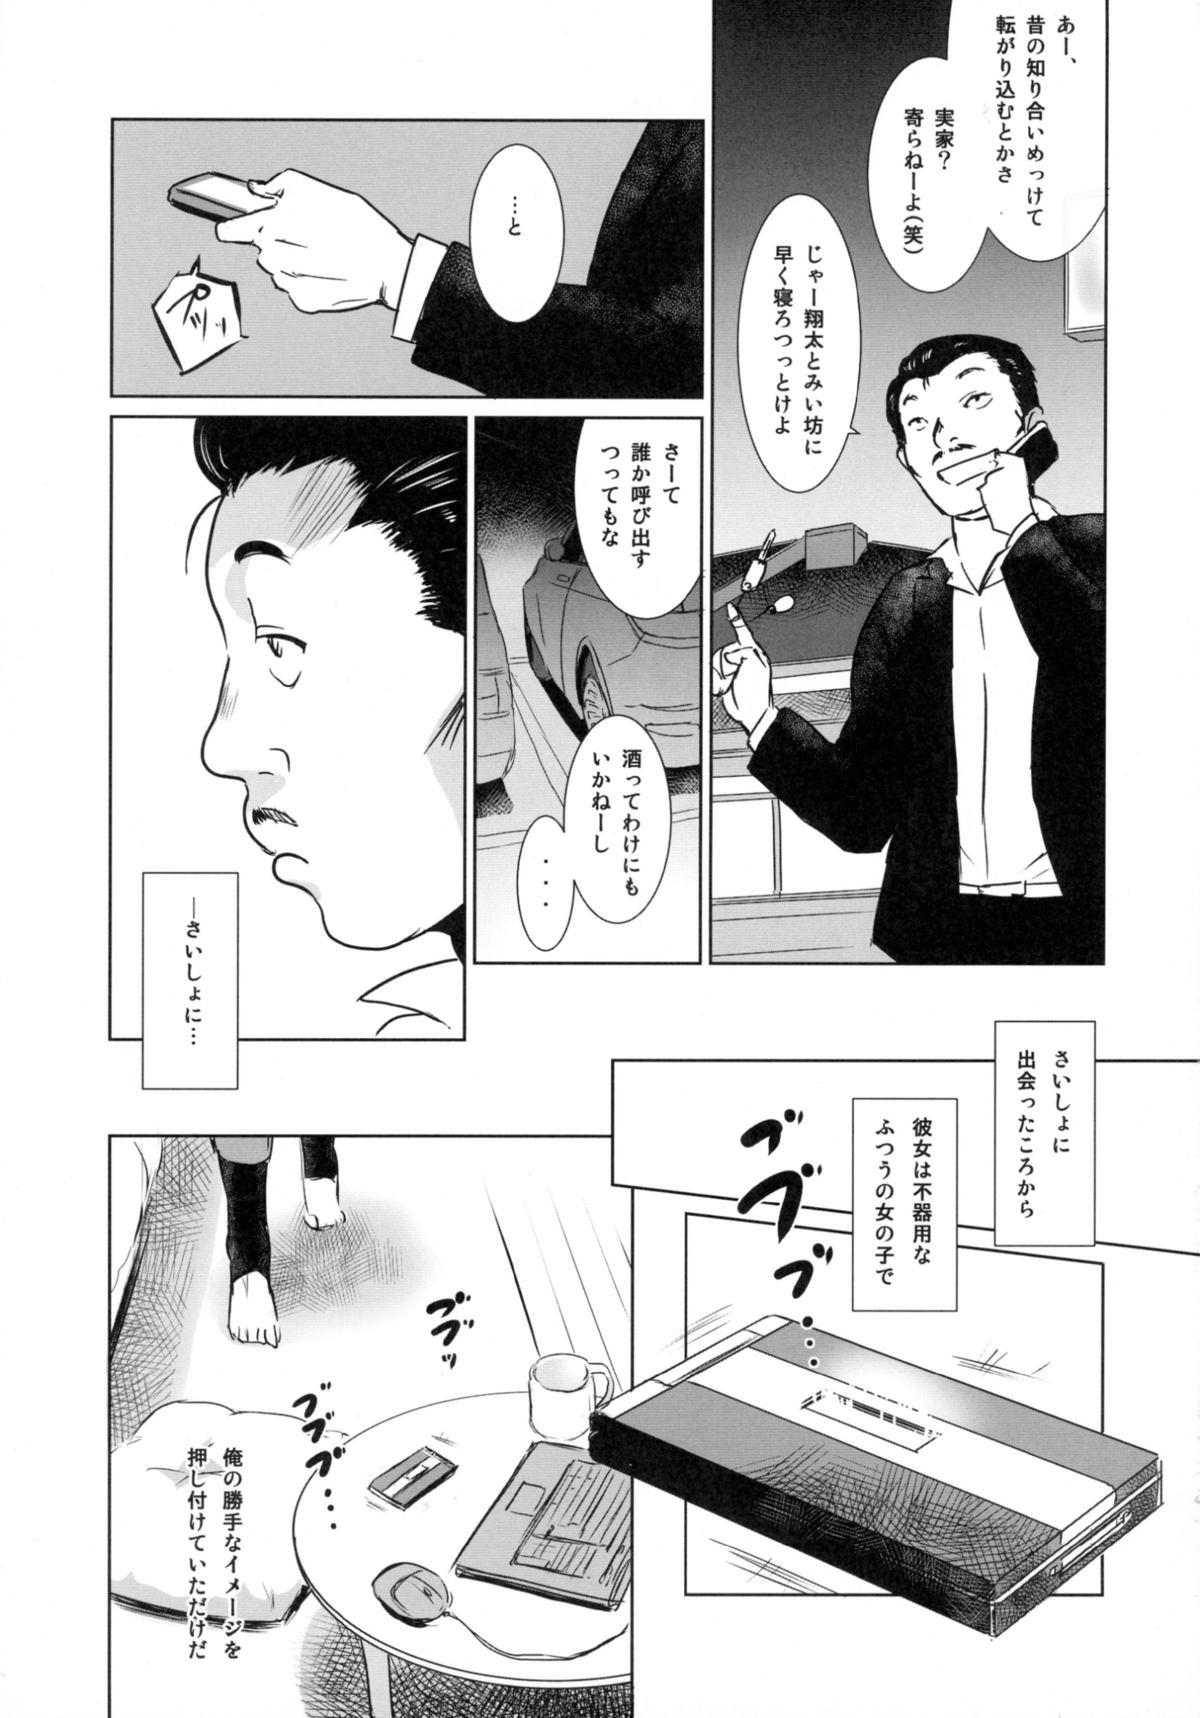 Story of the 'N' Situation - Situation#3 Mukashi no Otoko 34